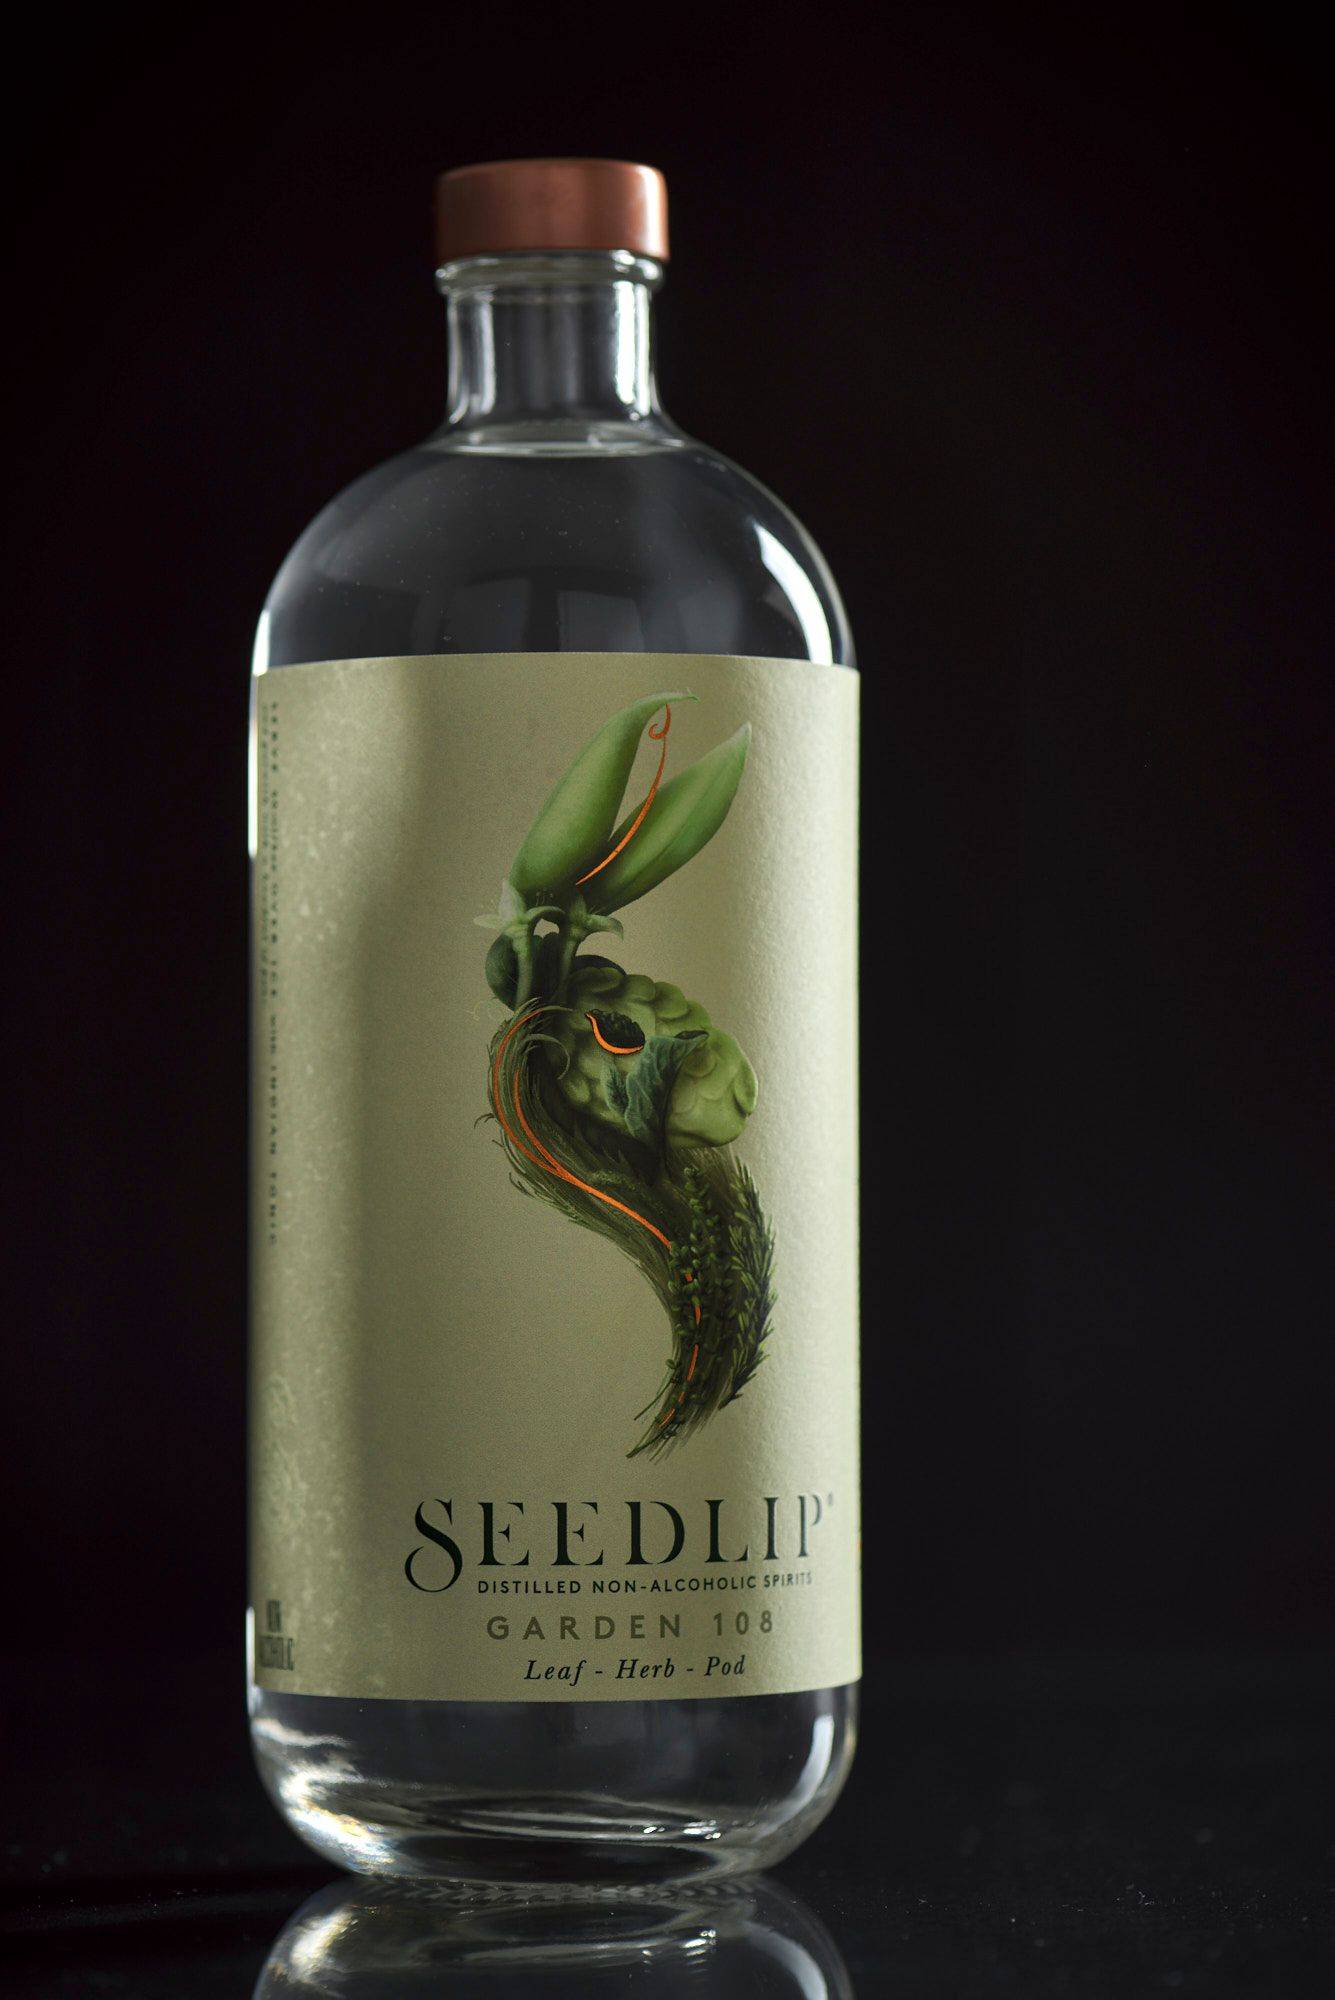 a bottle of alcohol-free spirit seedlip garden on black background